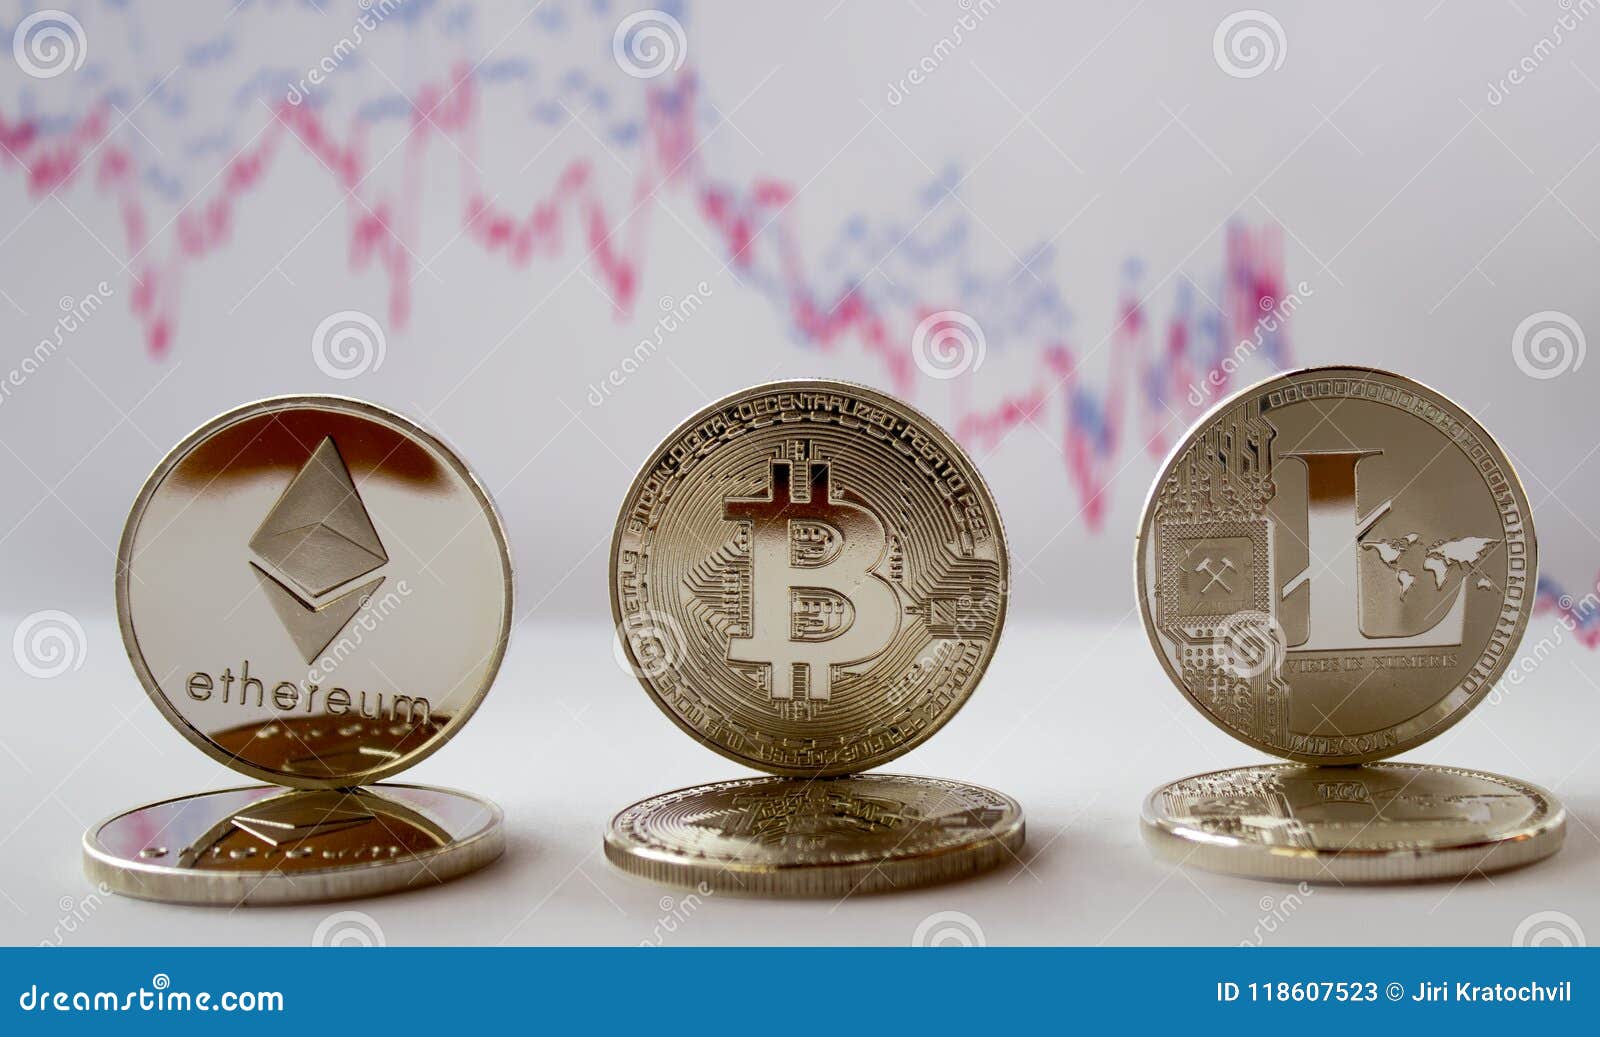 grafic bitcoin etereum litecoin